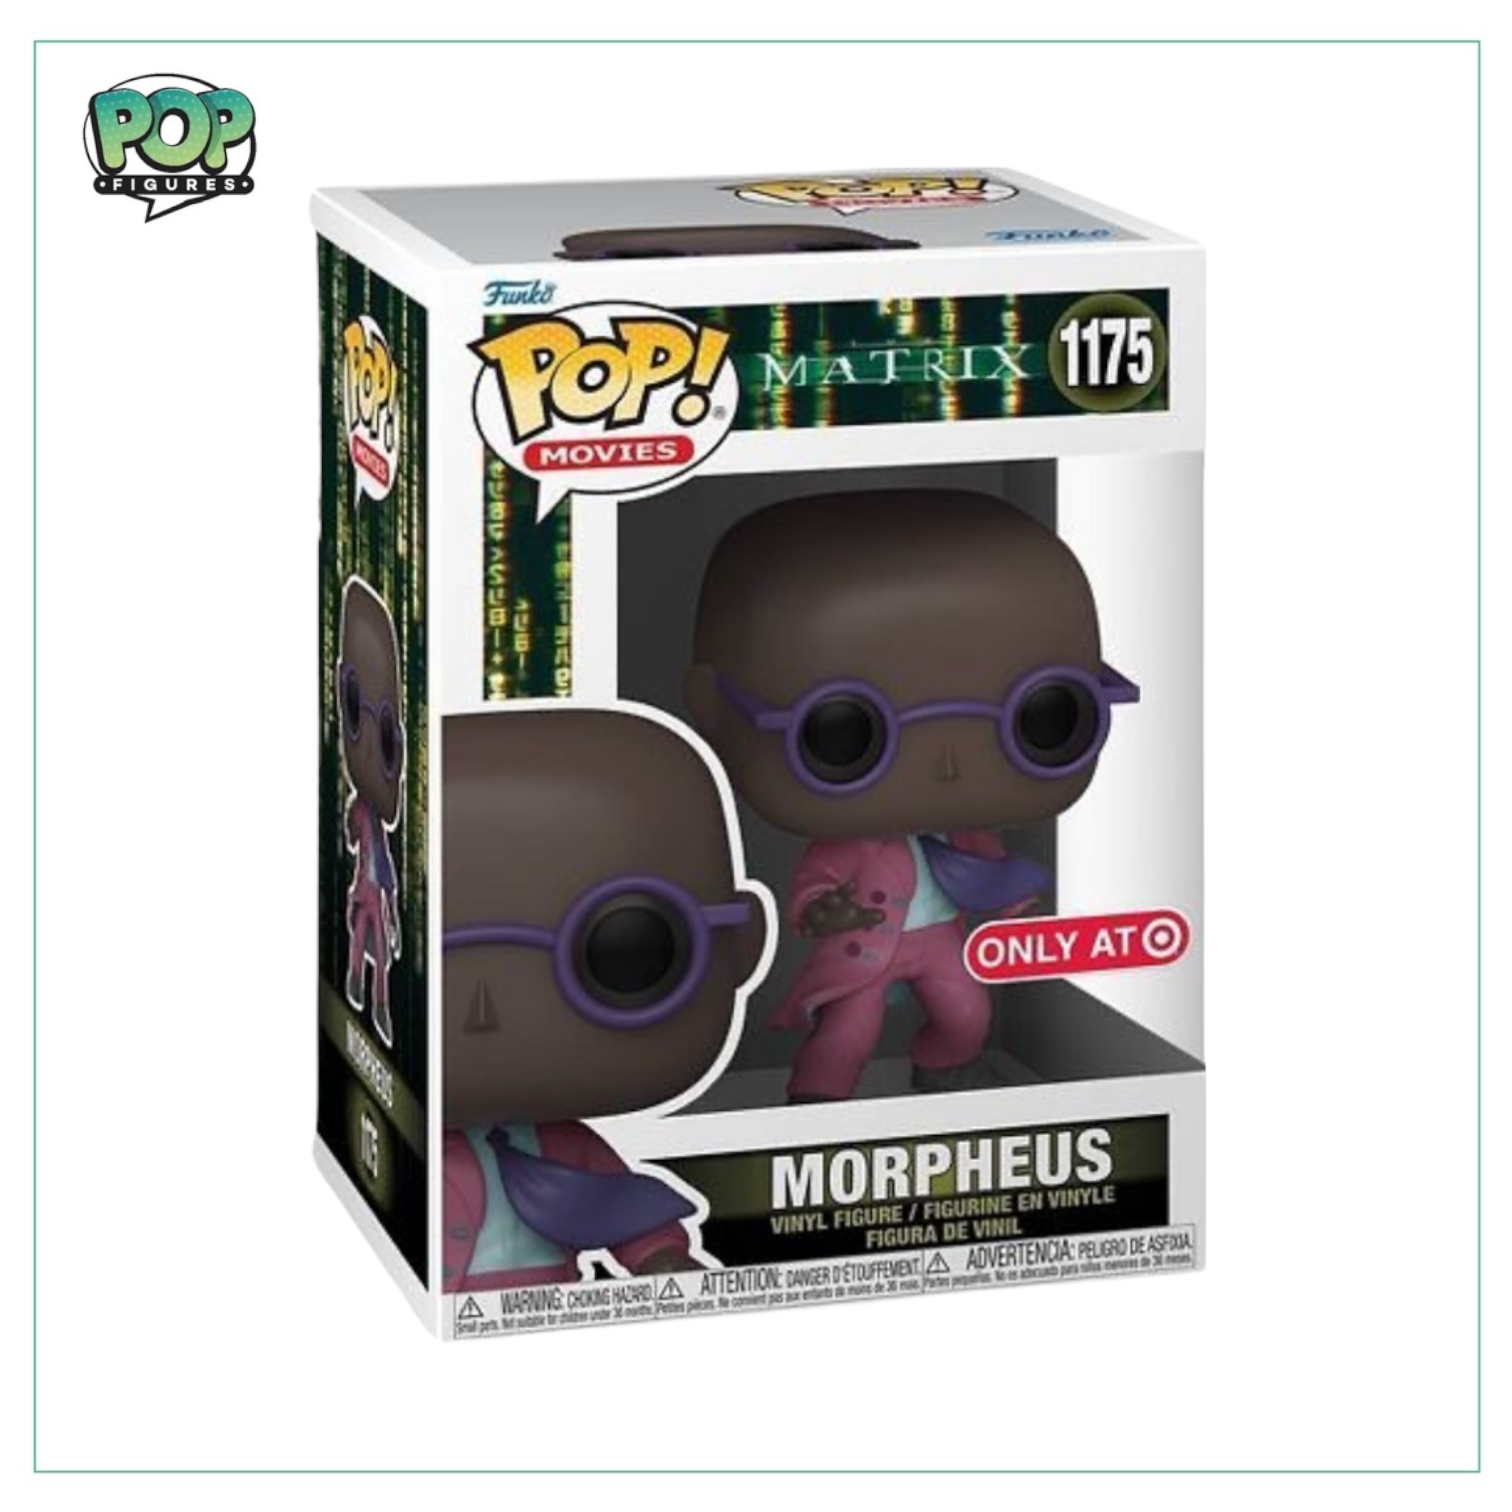 Morpheus #1175 Funko Pop! The Matrix - Target Exclusive